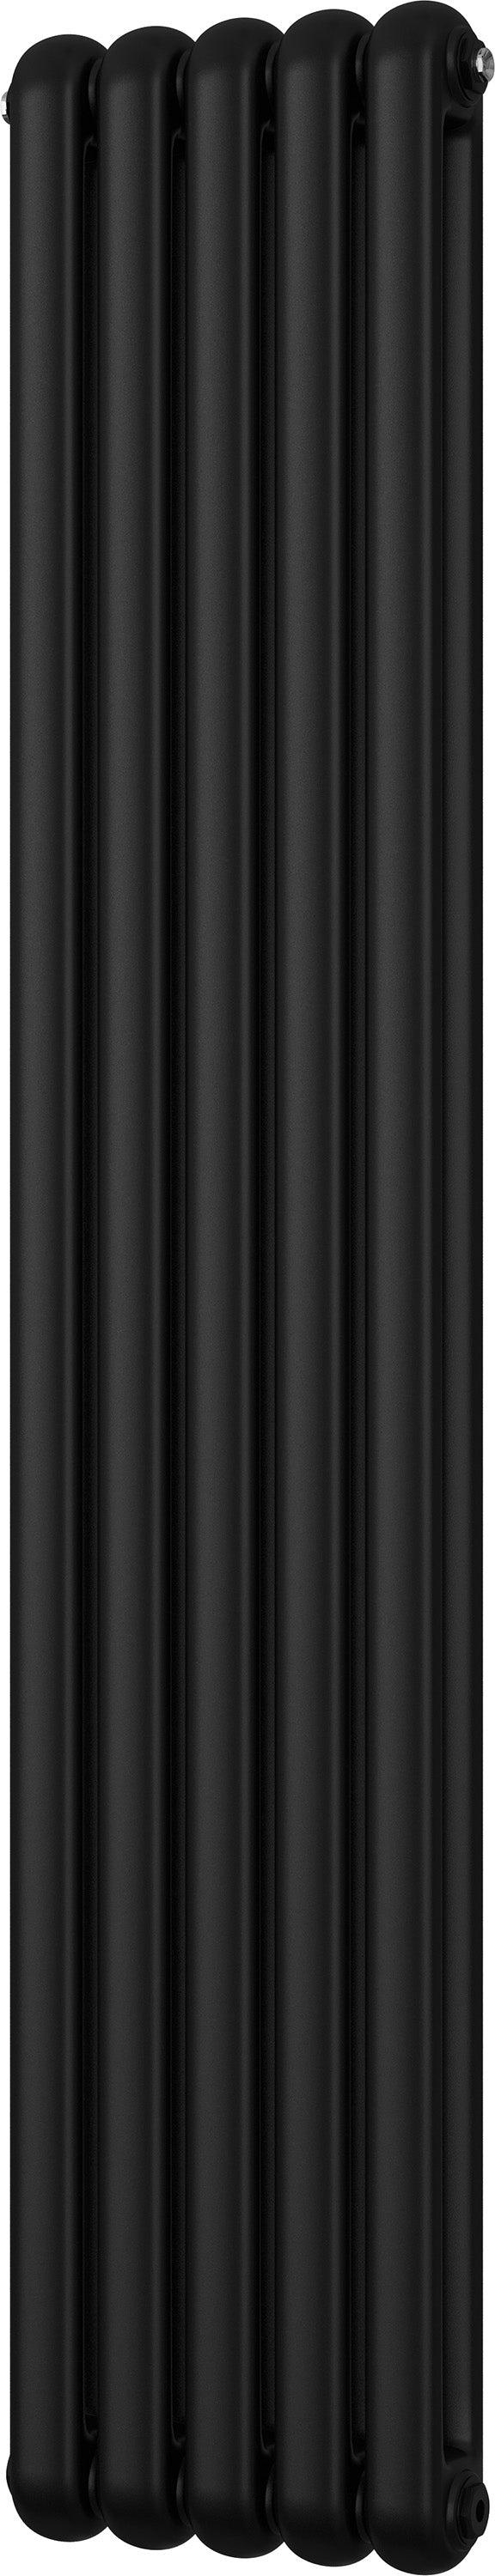 Sherwood - Black Vertical Round Top Column Radiator H1800mm x W368mm 2 Column